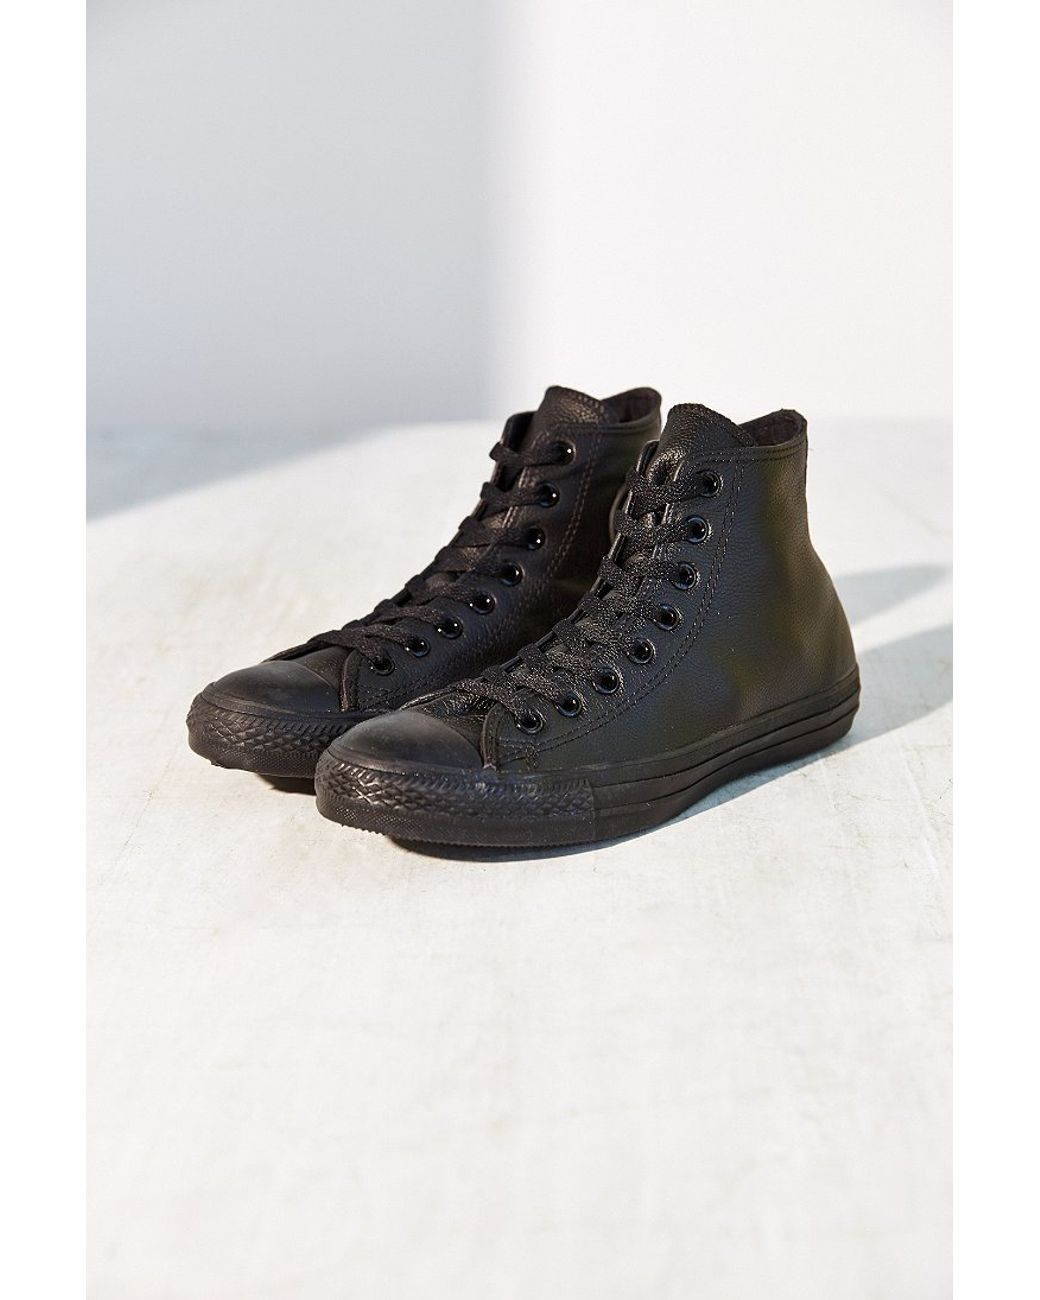 kedel Bekostning I stor skala Converse Chuck Taylor All Star Leather High Top Sneaker in Black | Lyst